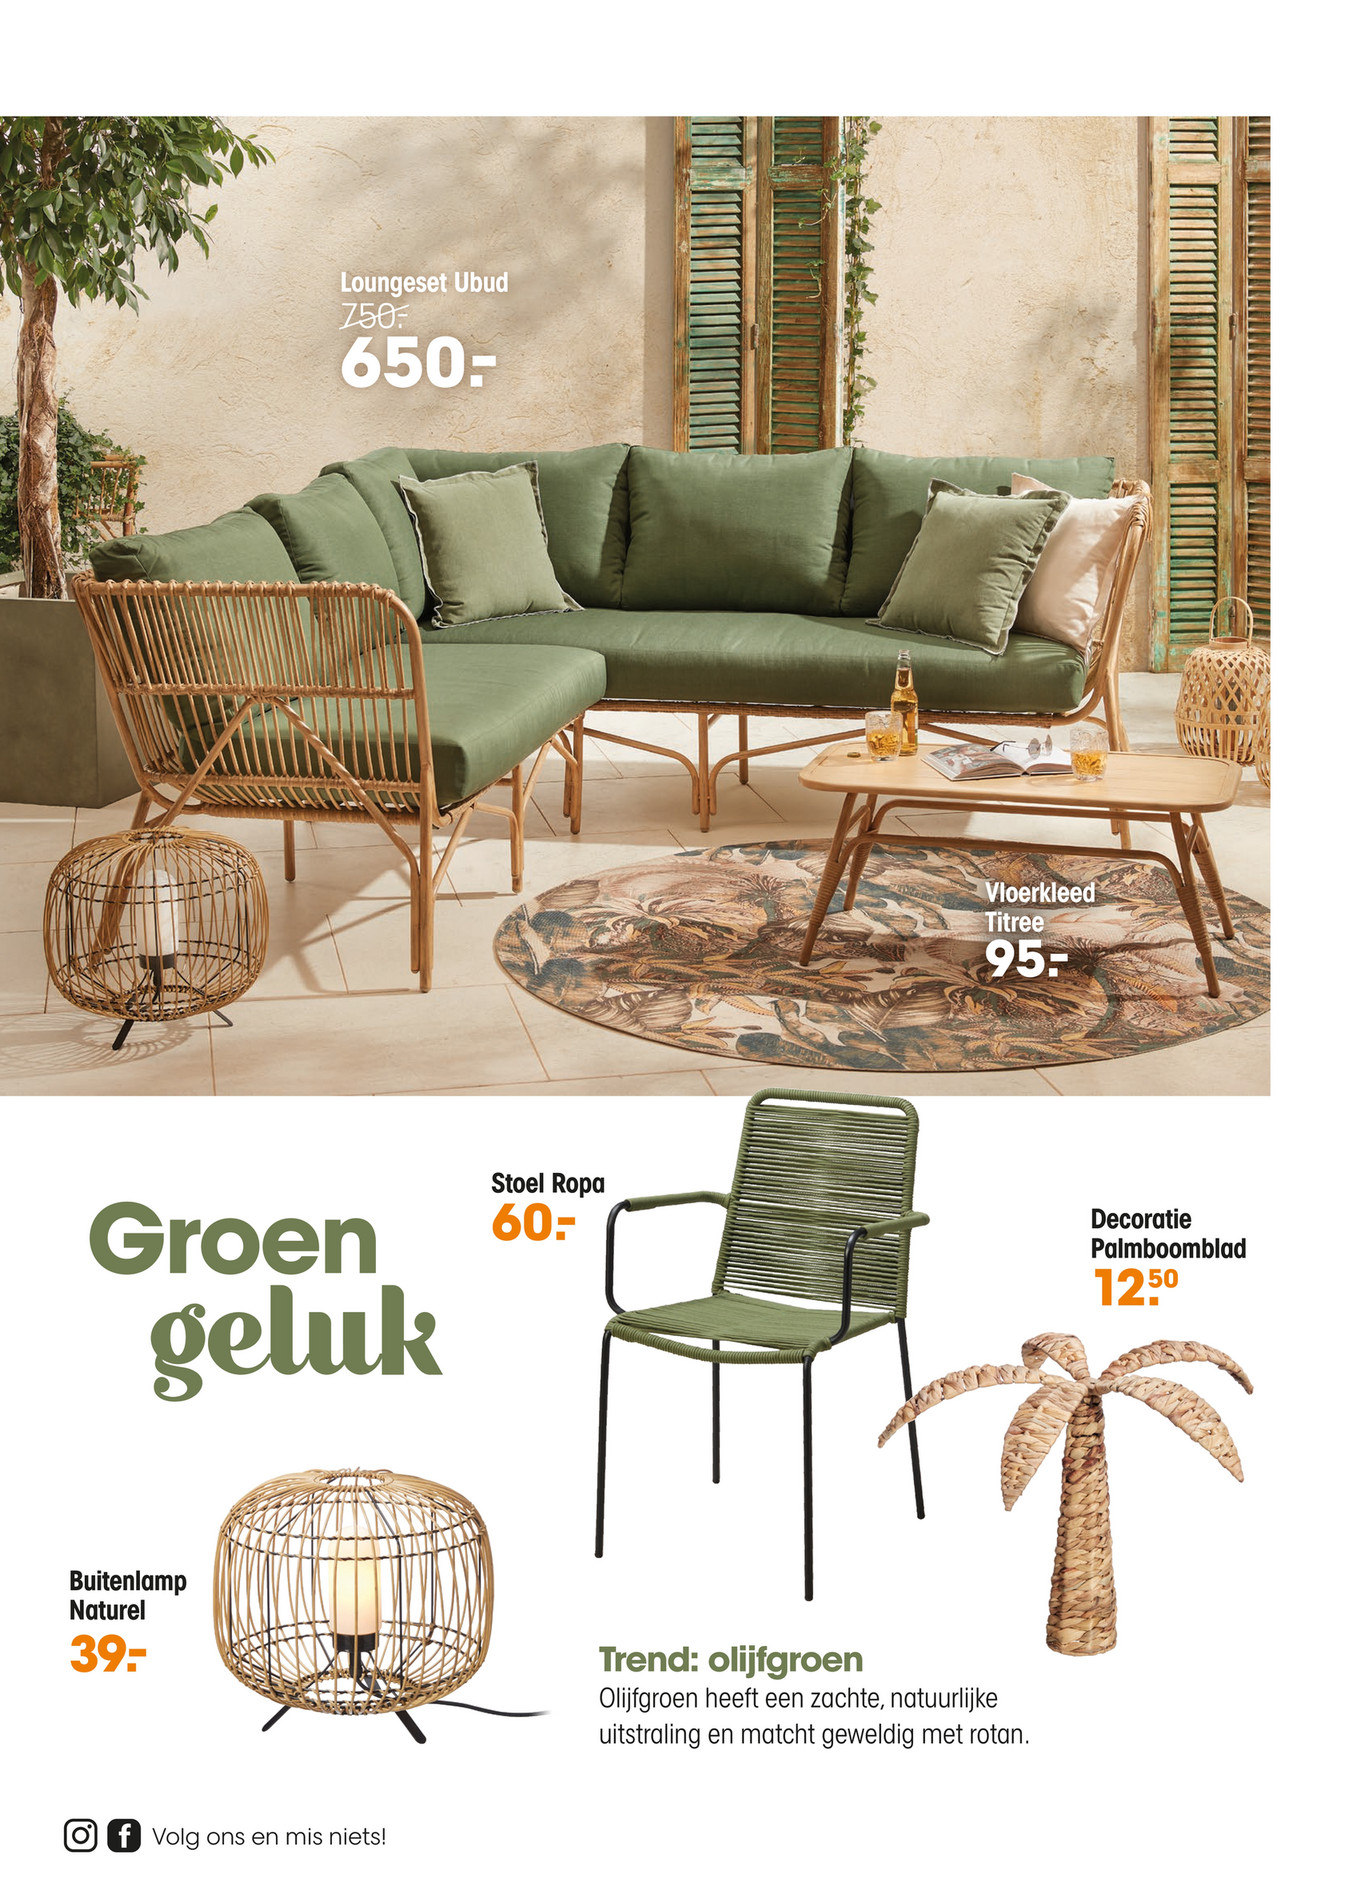 Uitstekend Oranje Grappig Kwantum Magazine NL - Tuinmagazine 2021 - Tuinbank Napels Grijs